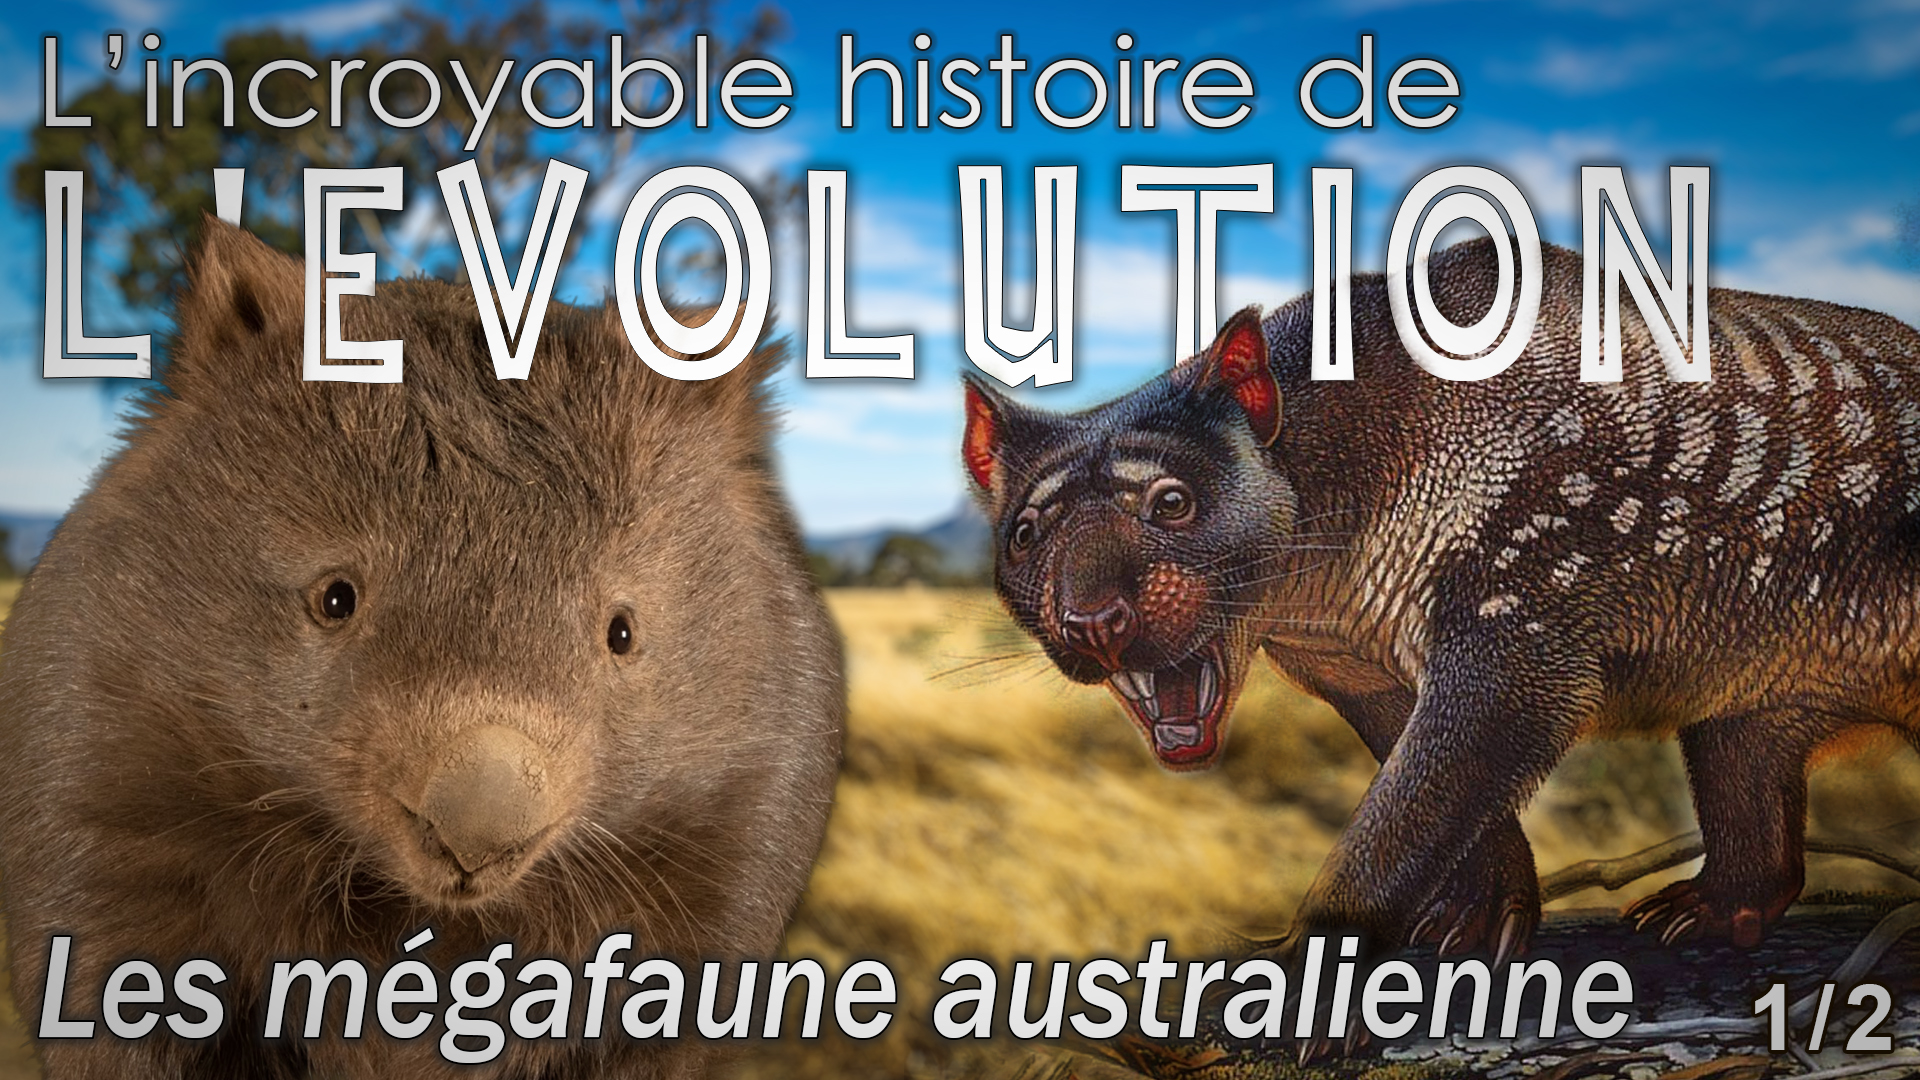 La mégafaune australienne